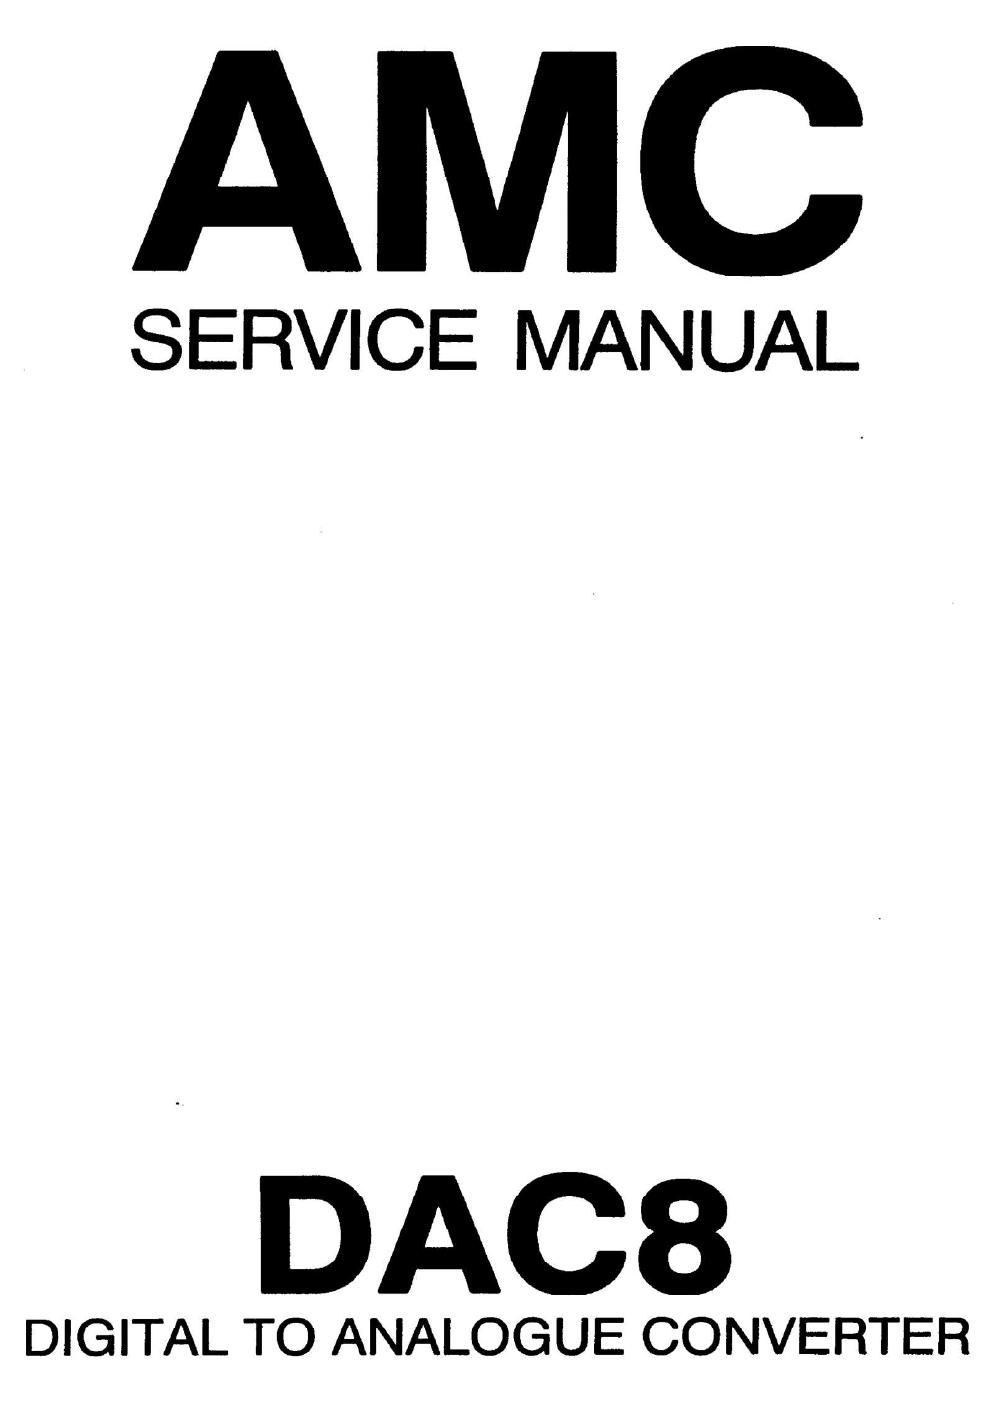 Amc DAC 8 dac service manual